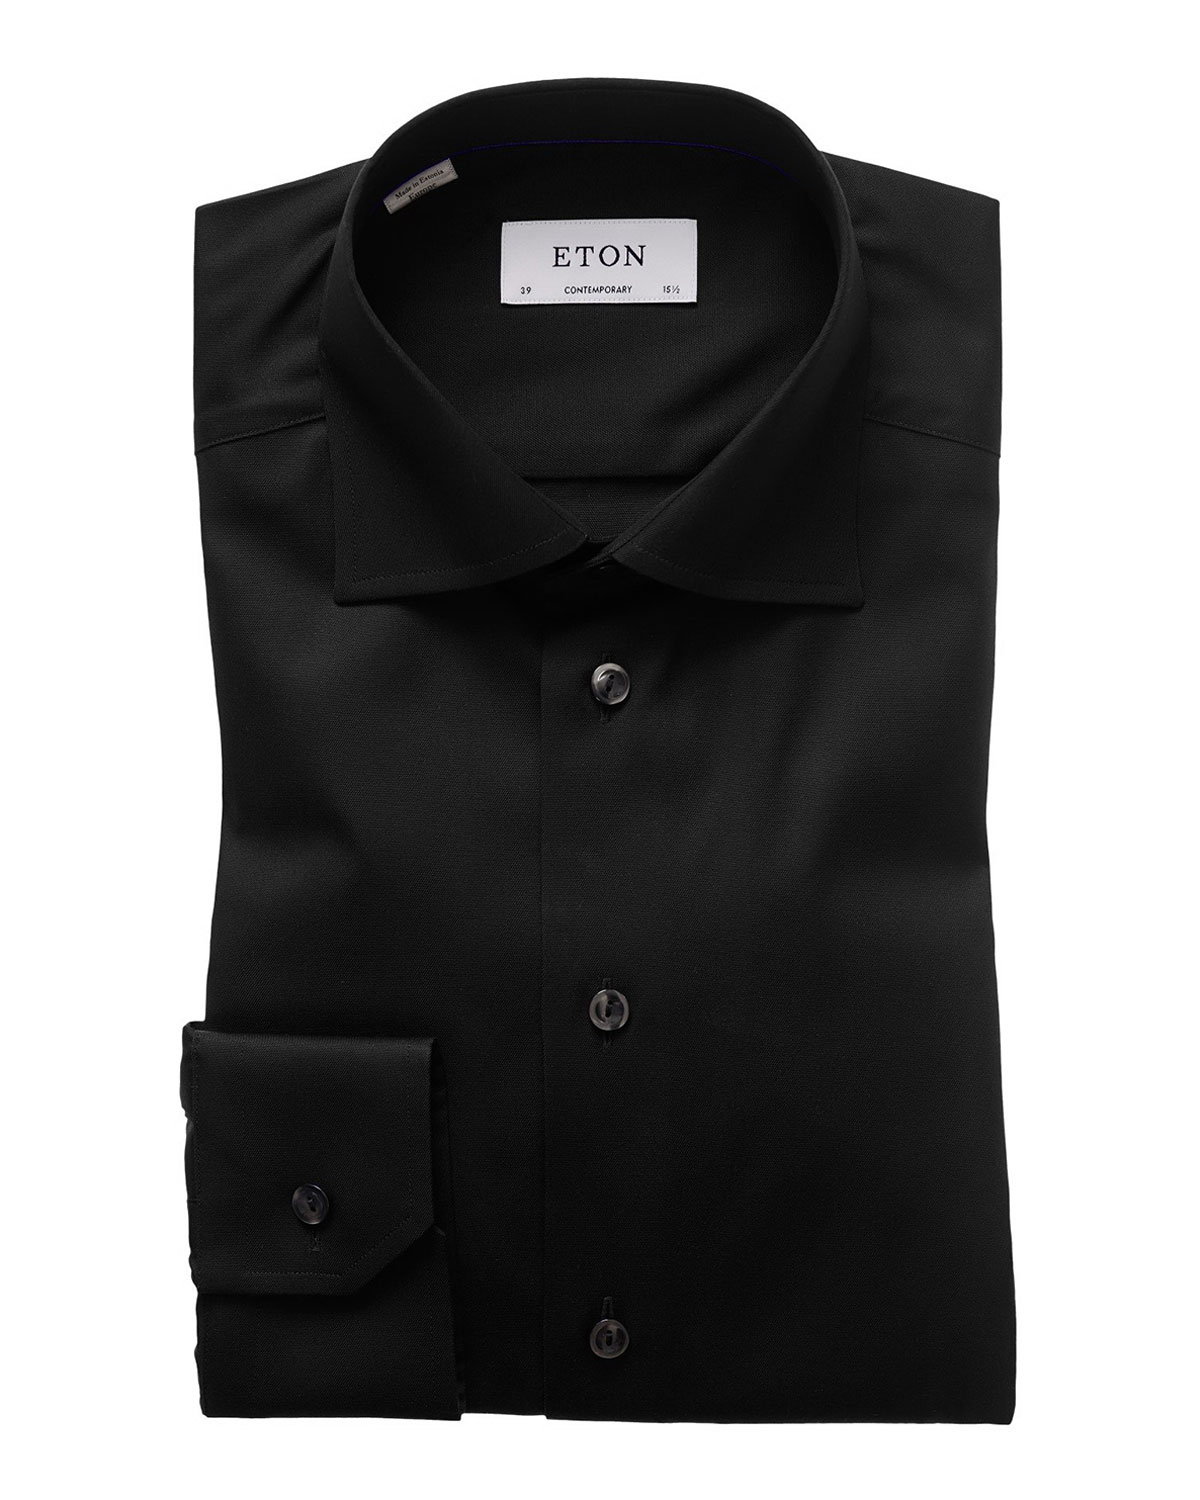 ETON CONTEMPORARY-FIT TWILL DRESS SHIRT,PROD201970203